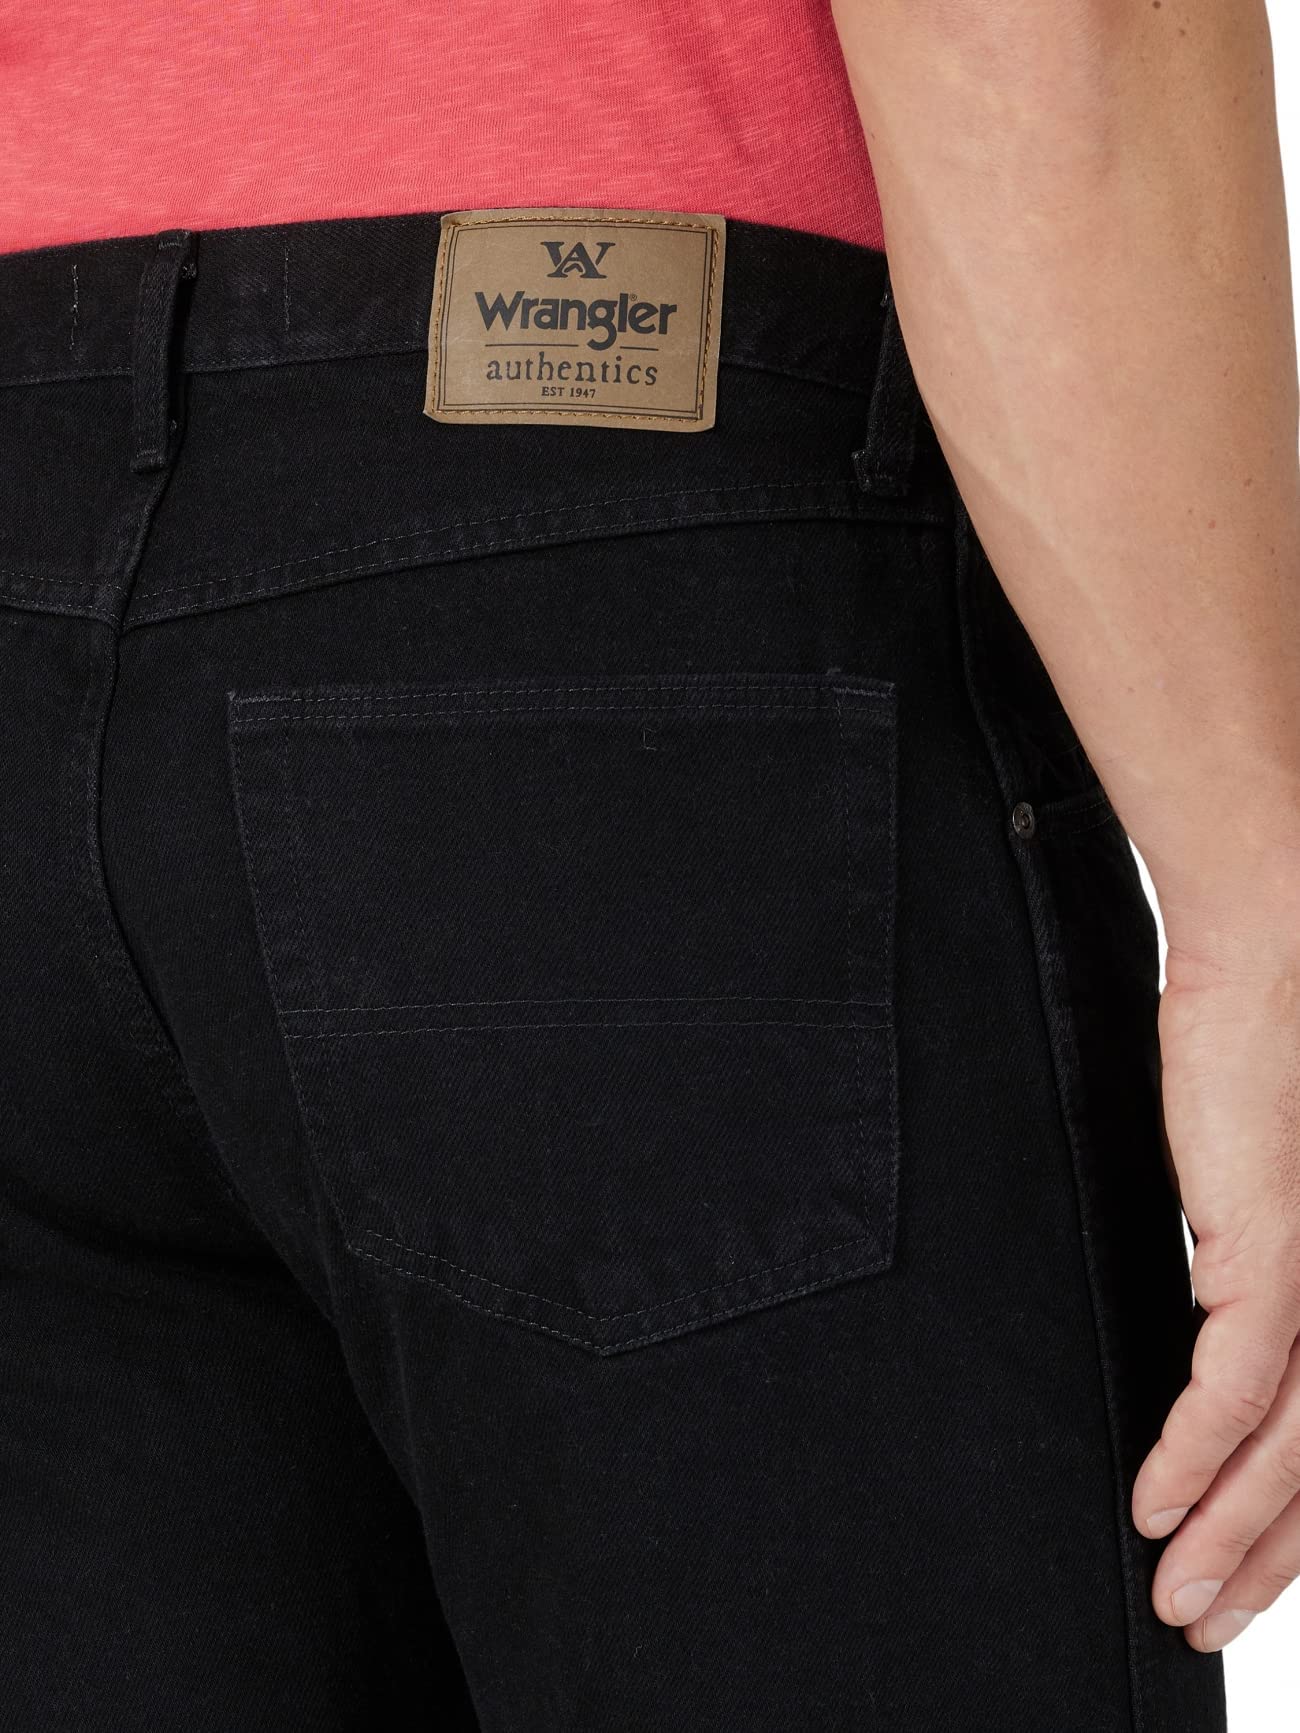 Wrangler Authentics Men's Classic 5-Pocket Regular Fit Cotton Jean, Black, 40W x 30L